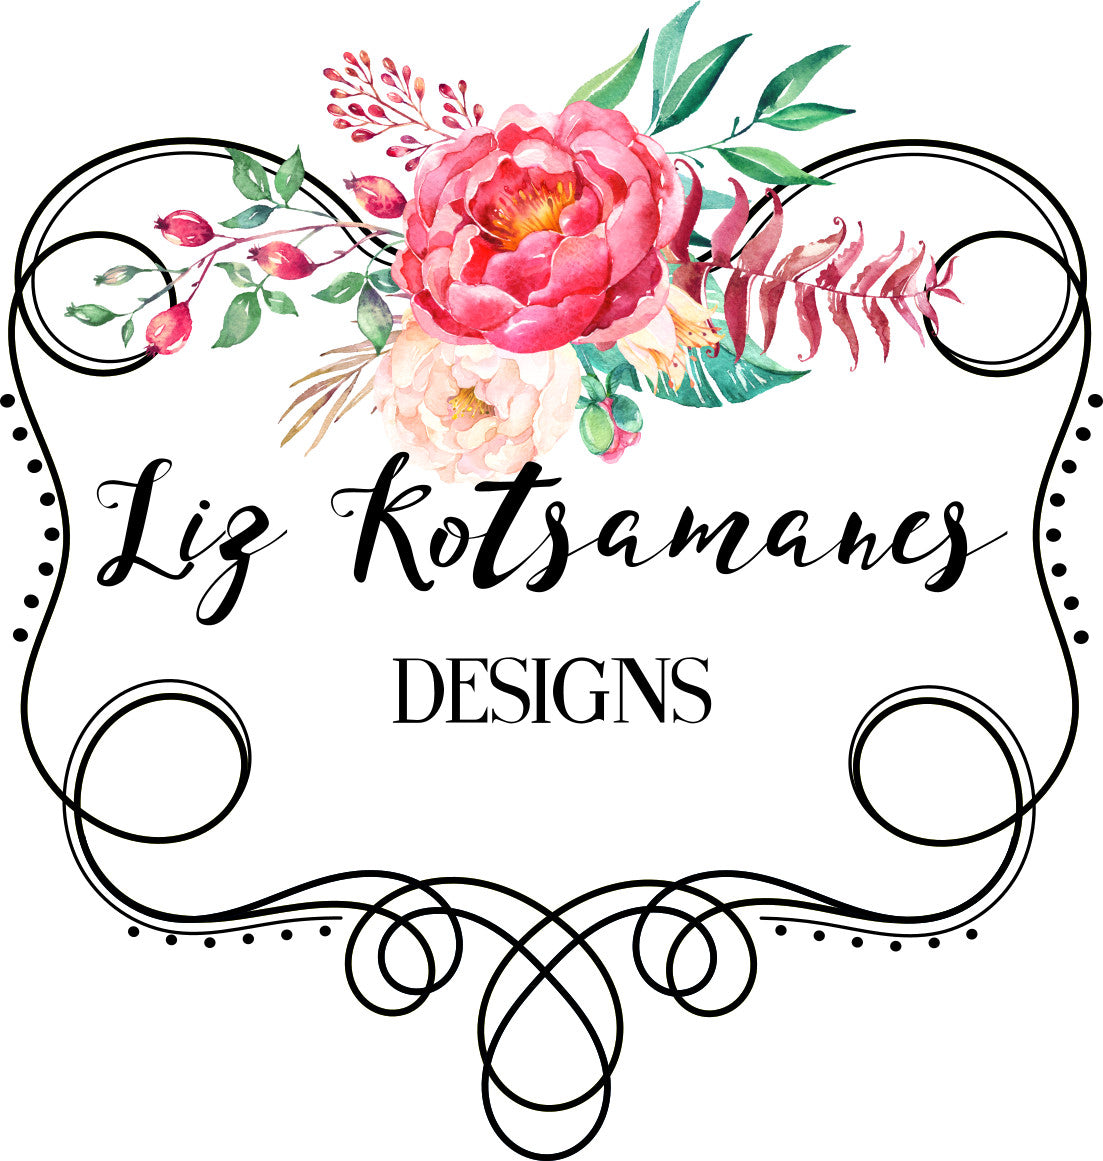 Liz Kotsamanes Designs